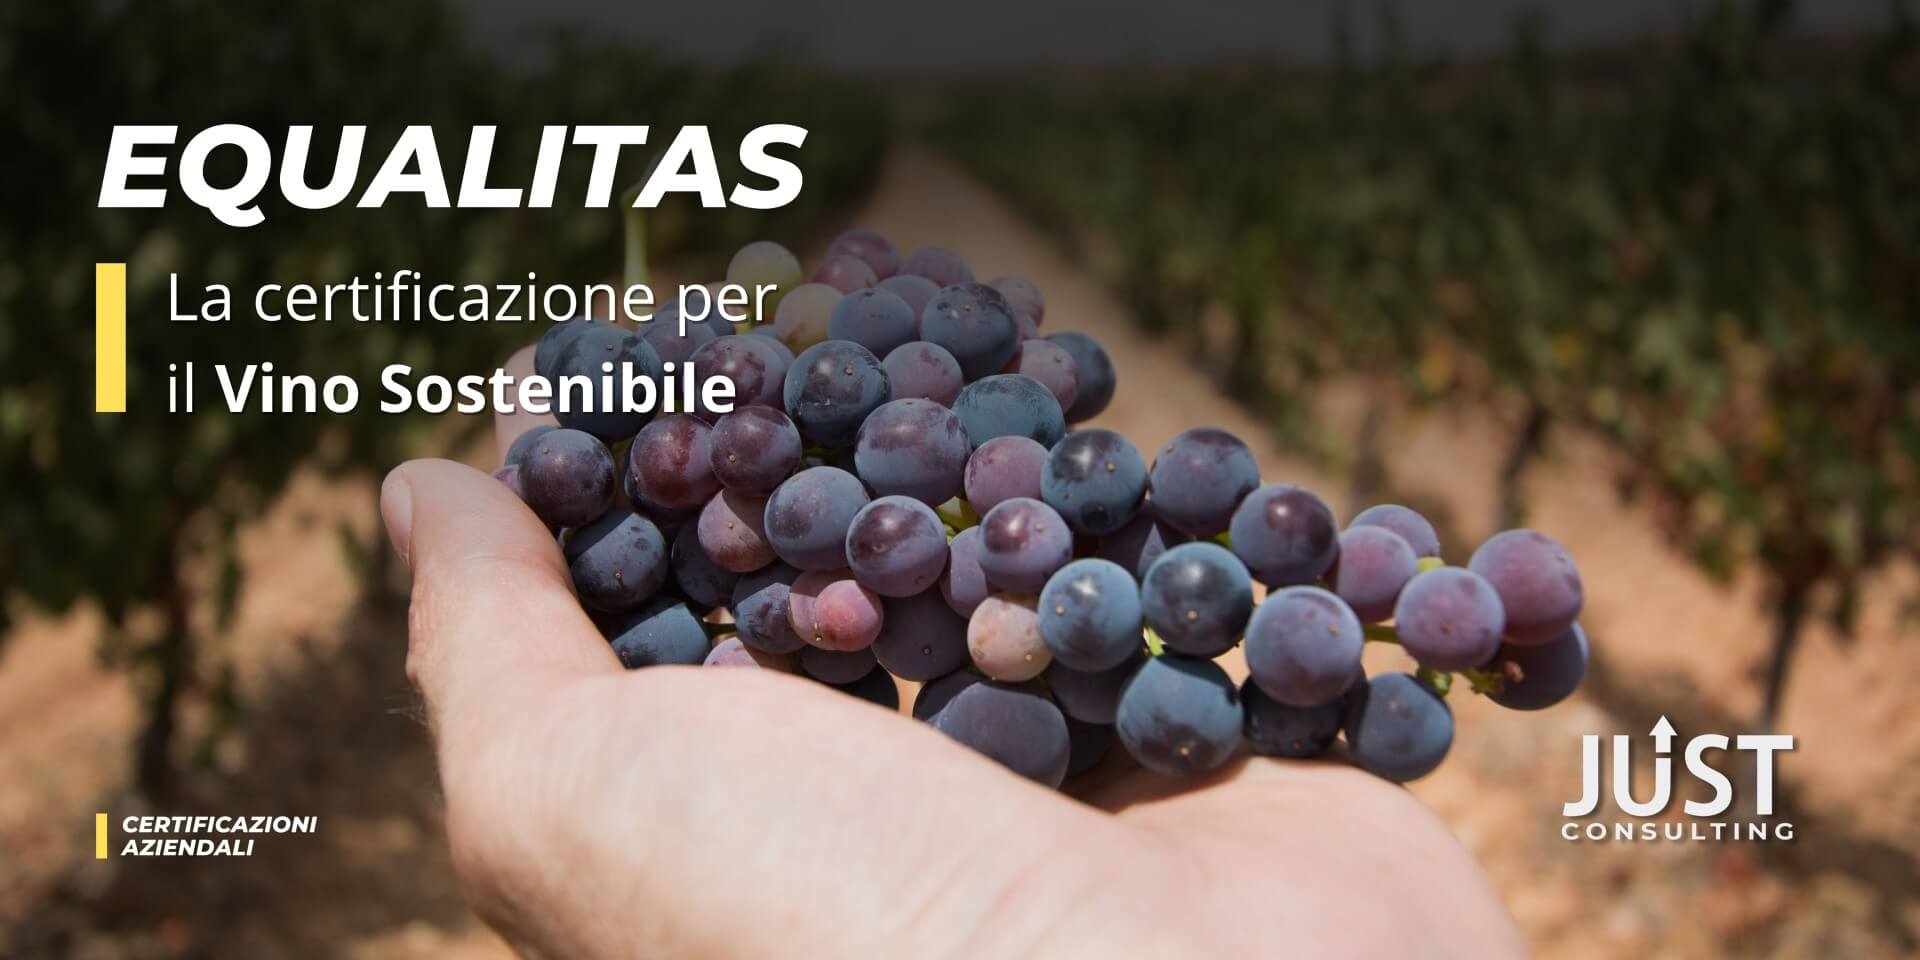 Equalitas certificazione vino sostenibile